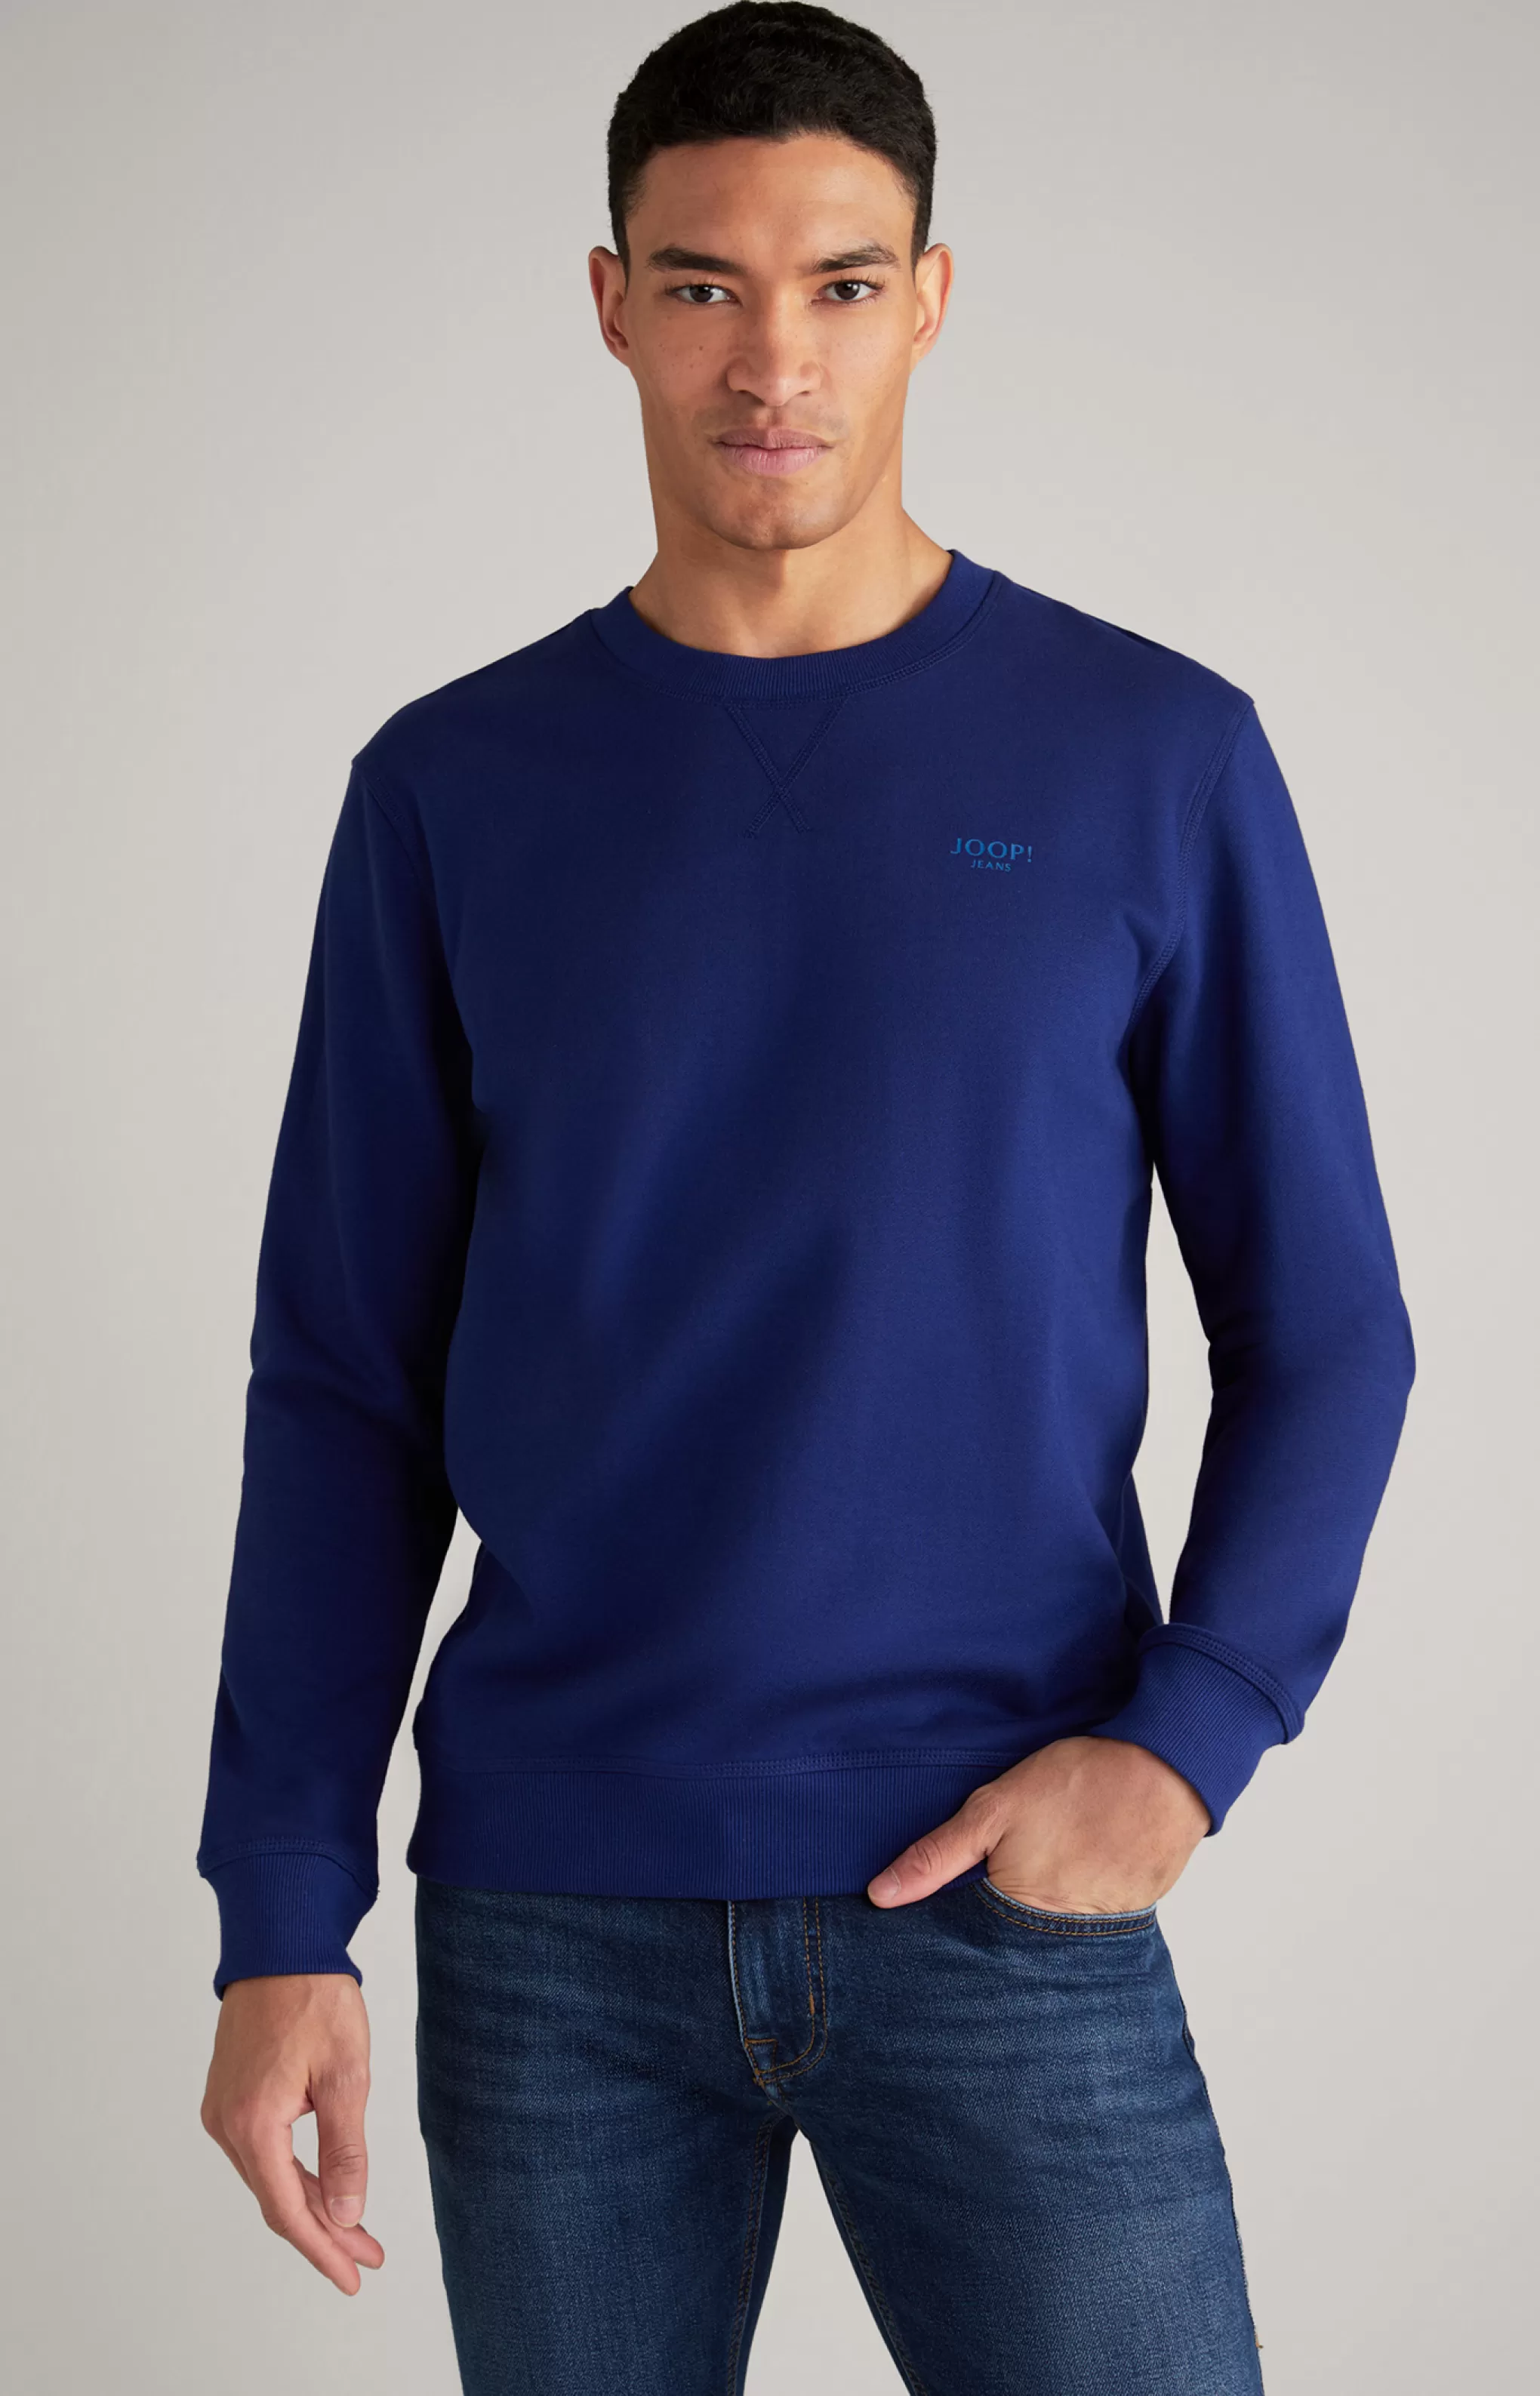 Sweatshirts | Clothing*JOOP Sweatshirts | Clothing Salazar Cotton Sweatshirt in